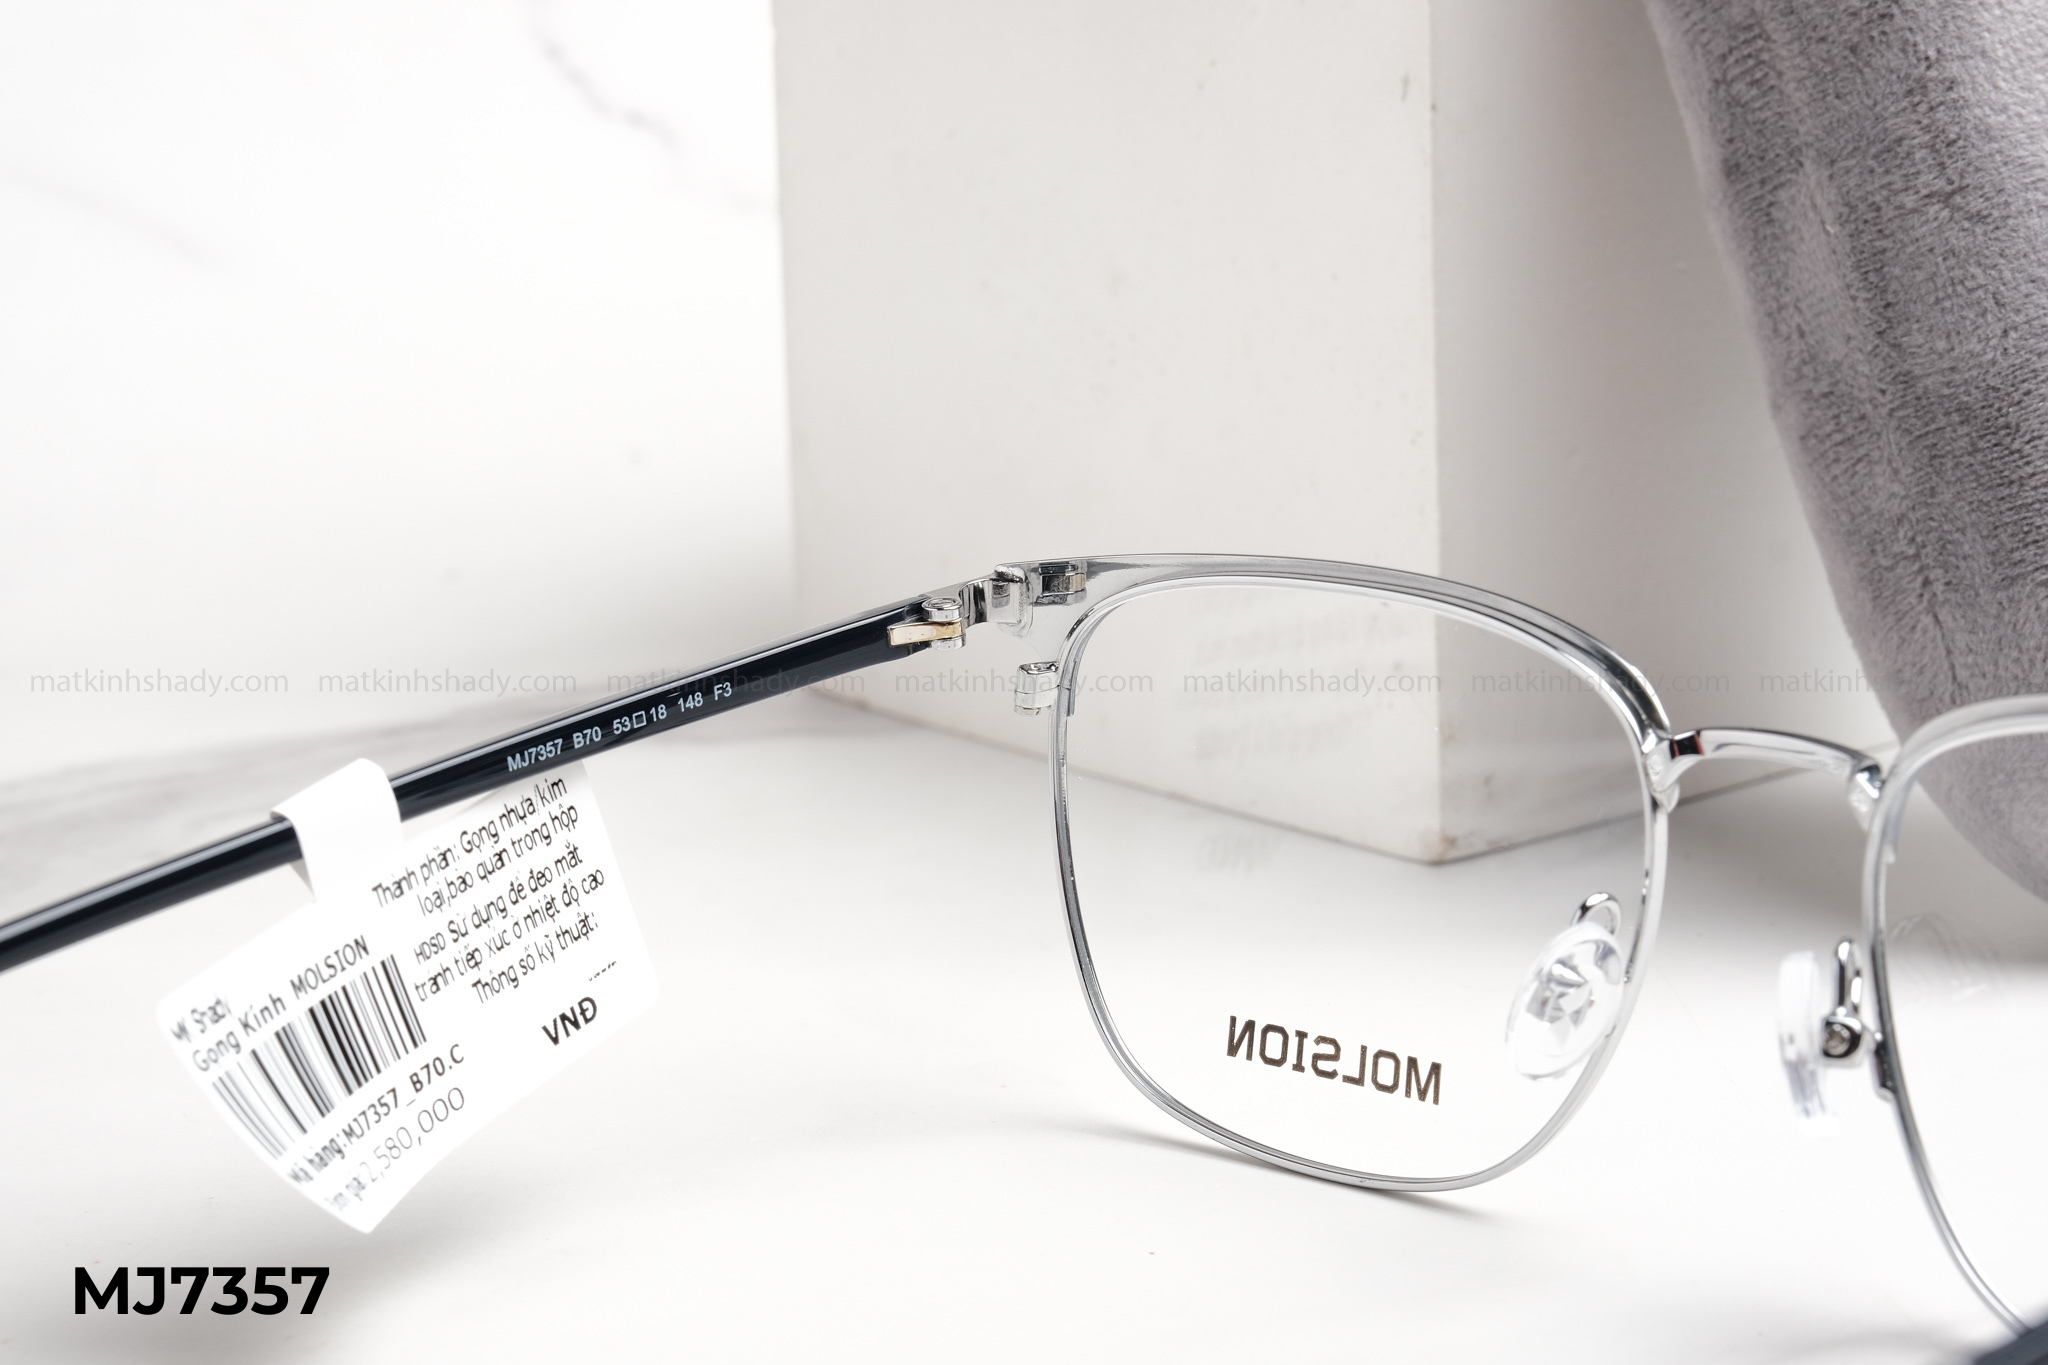  Molsion Eyewear - Glasses - MJ7357 